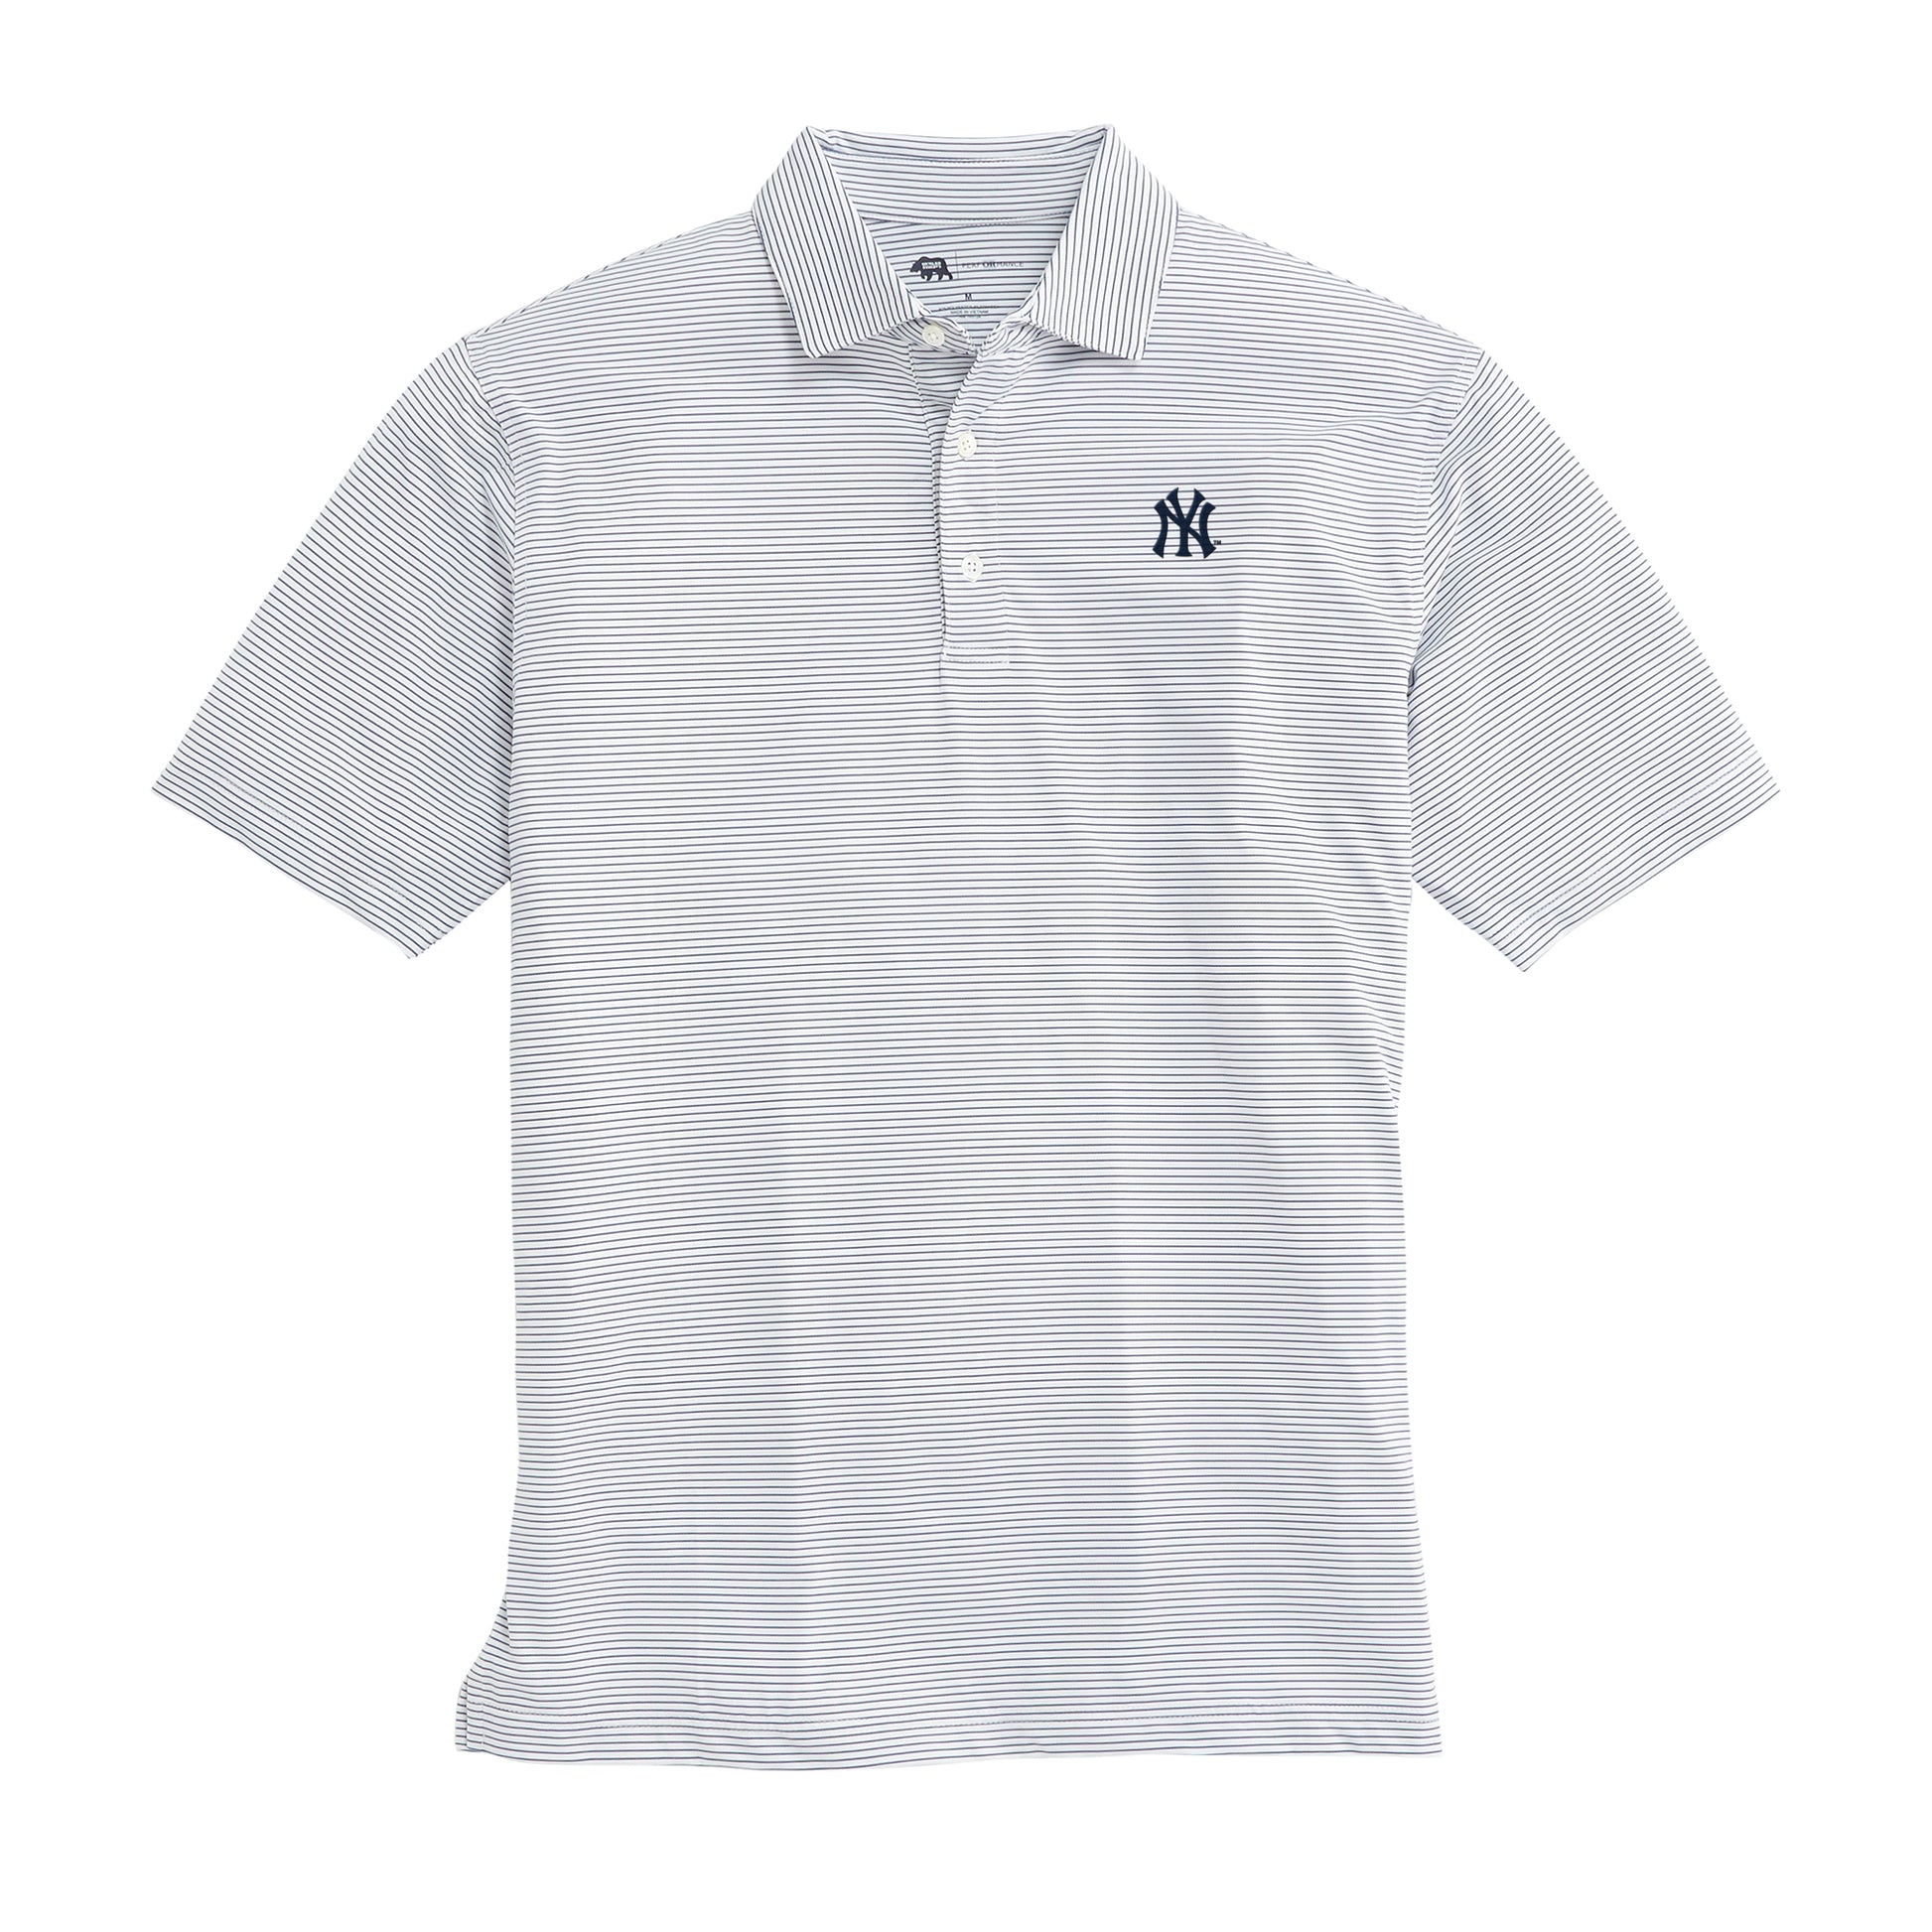 New York Yankees Polos, Golf Shirt, Yankees Polo Shirts